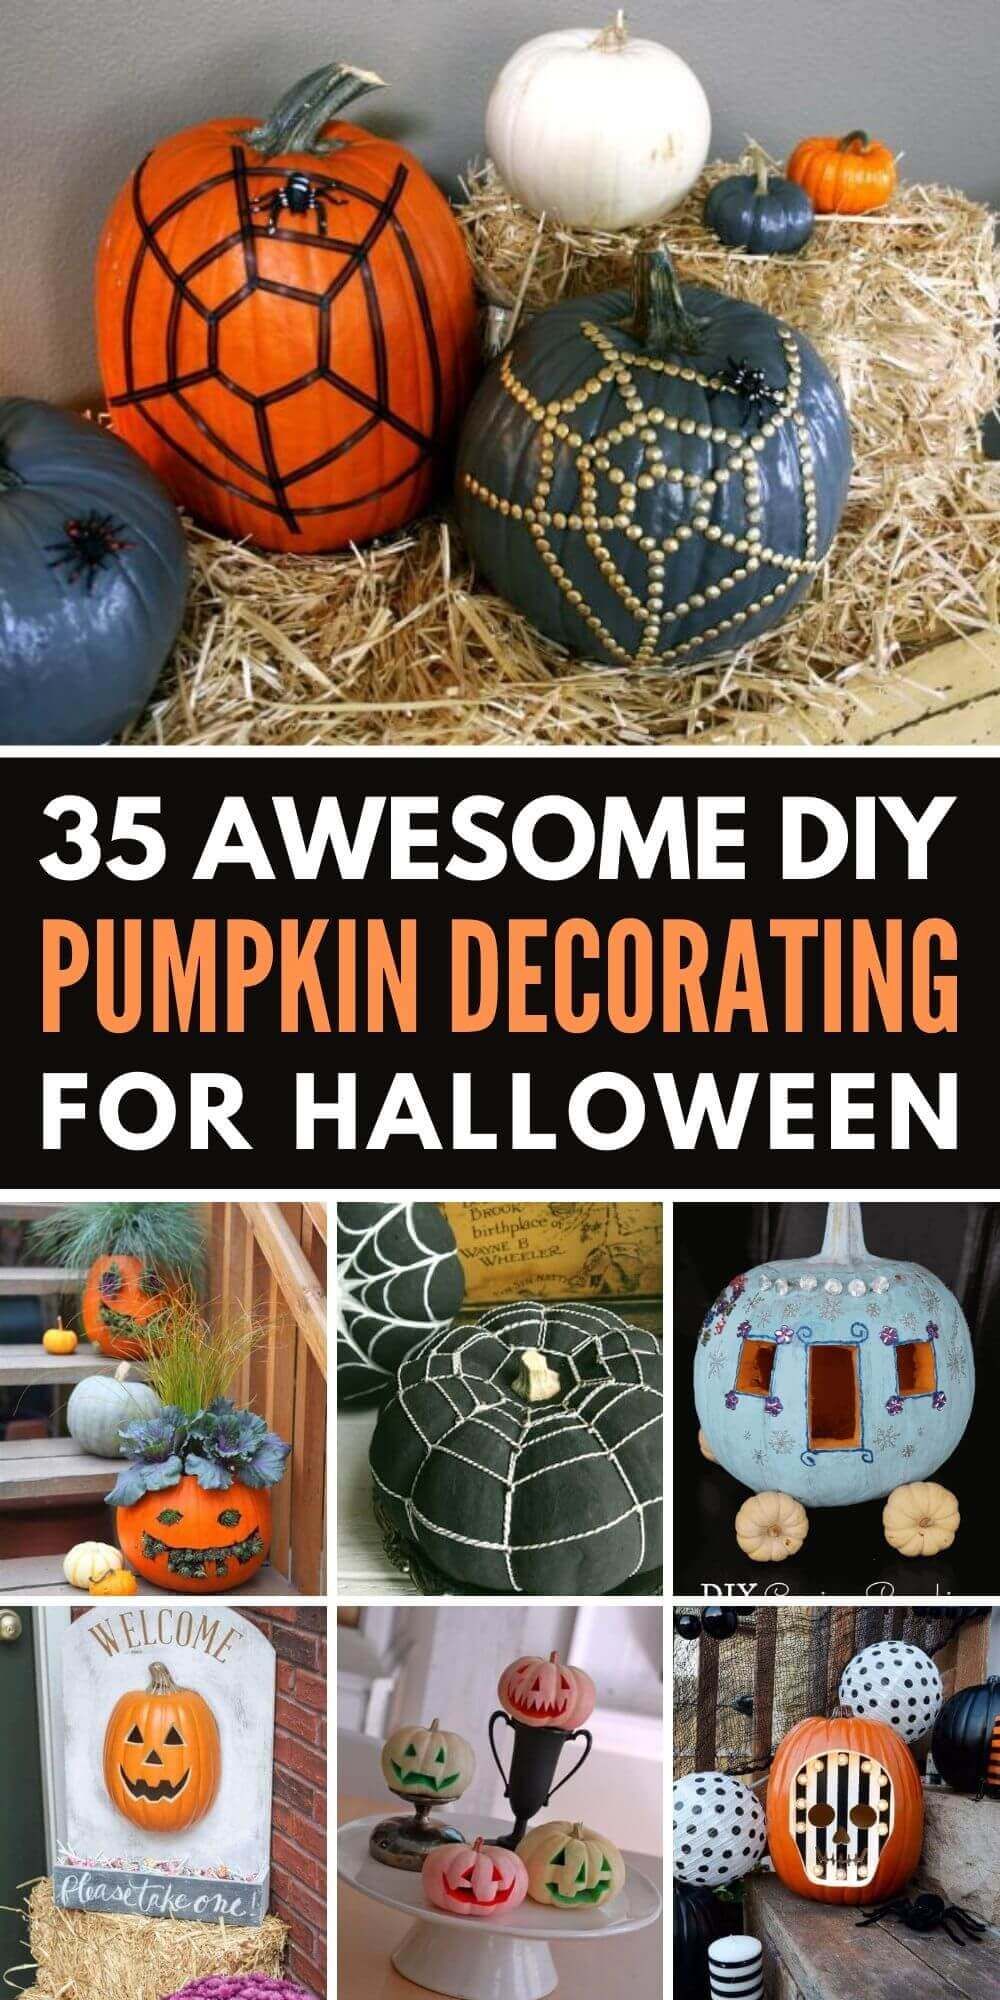 35 Great DIY Pumpkin Decorating Ideas For Halloween